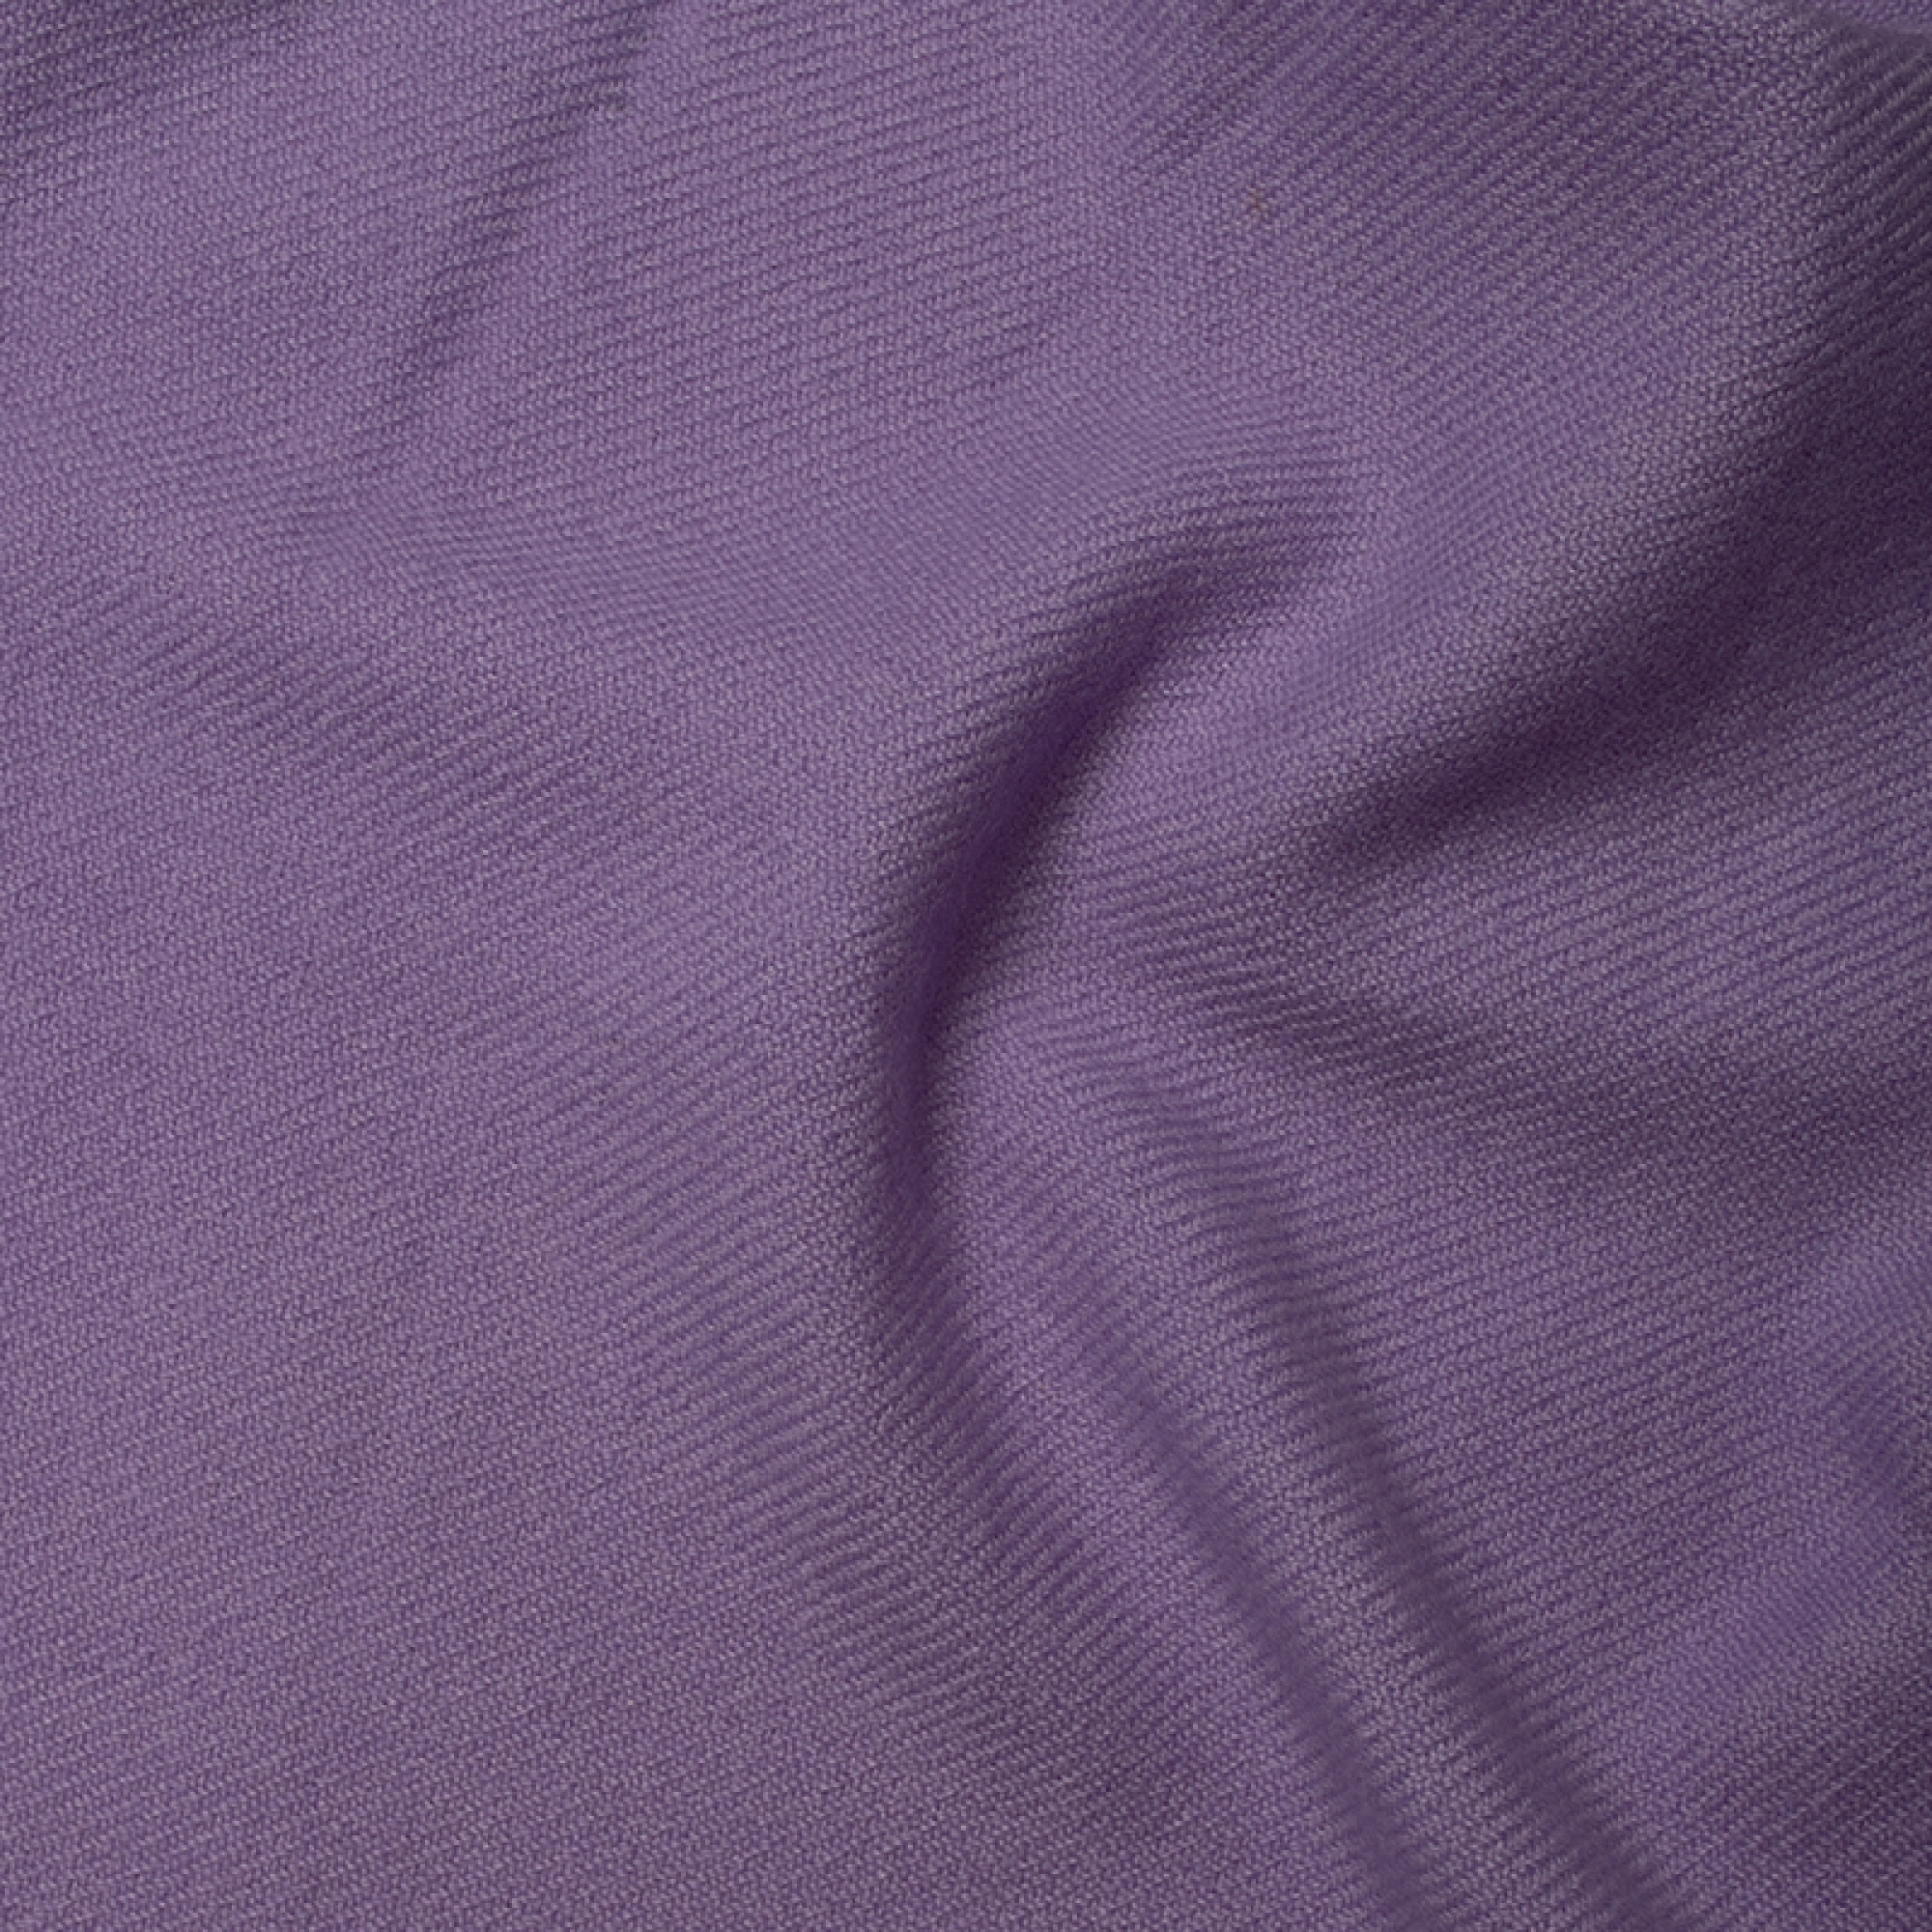 Cashmere accessories blanket toodoo plain l 220 x 220 violet tulip 220x220cm